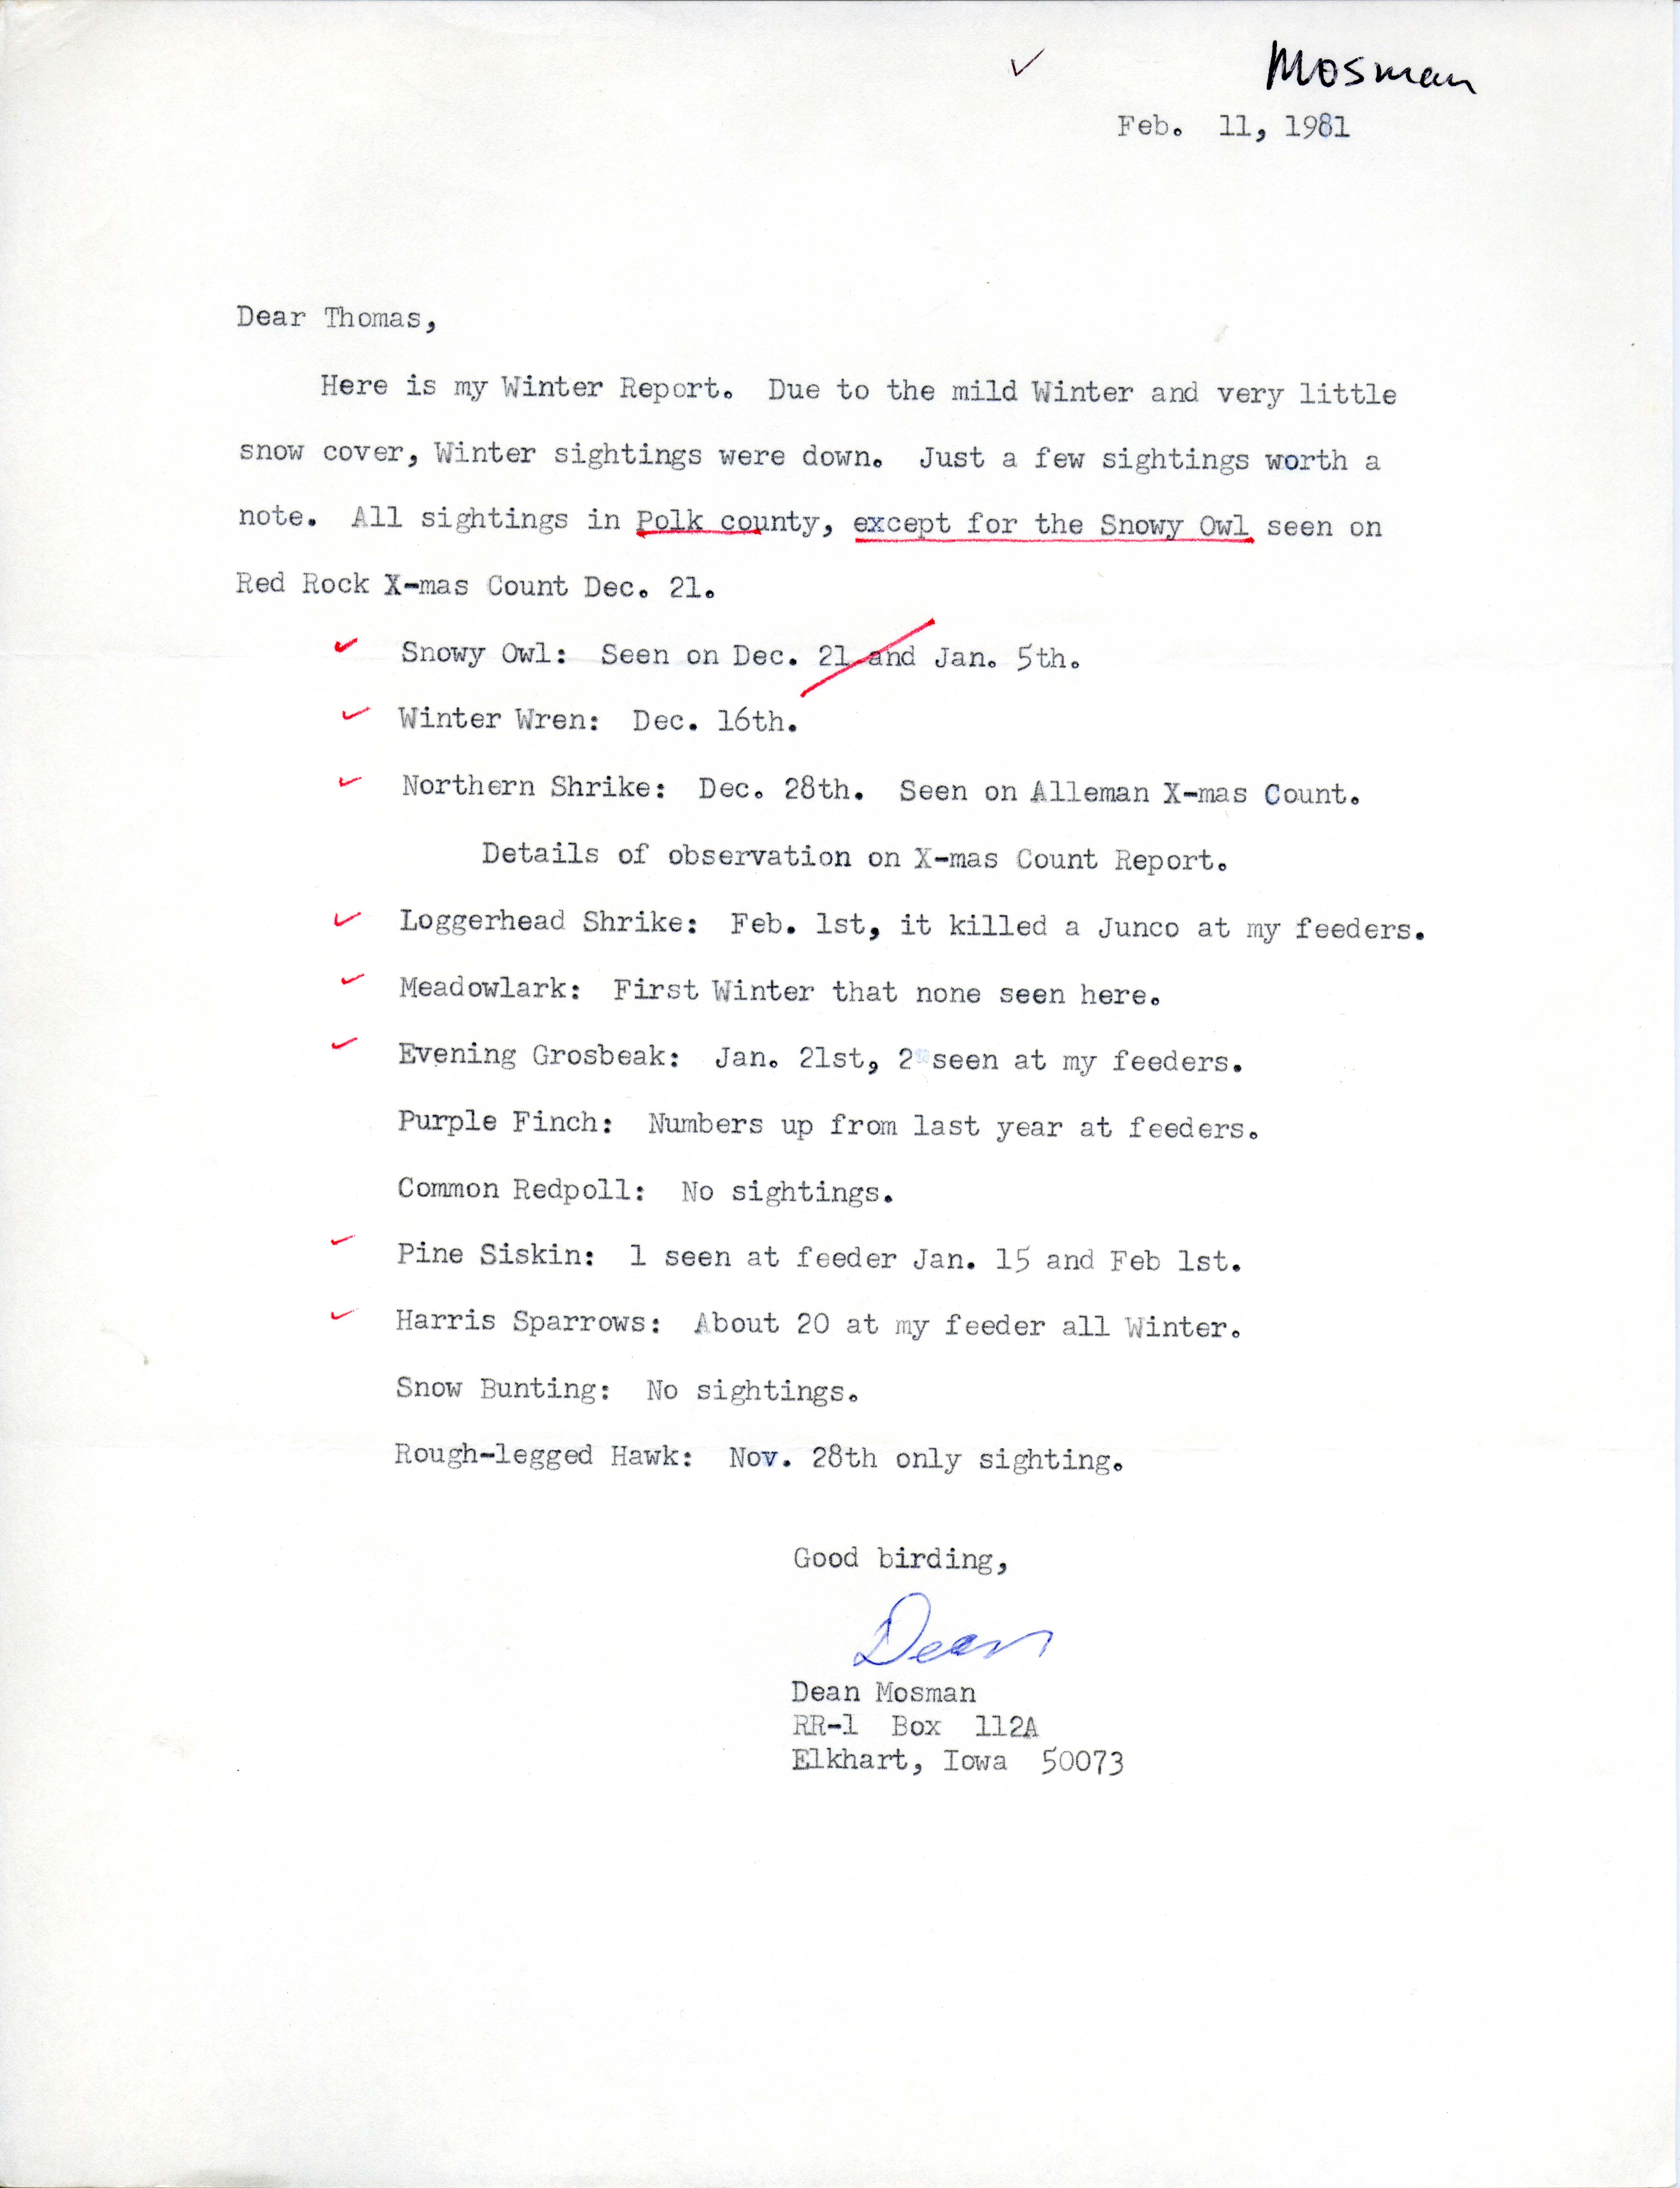 Dean Mosman letter to Thomas Kent regarding winter bird sightings, February 11, 1981